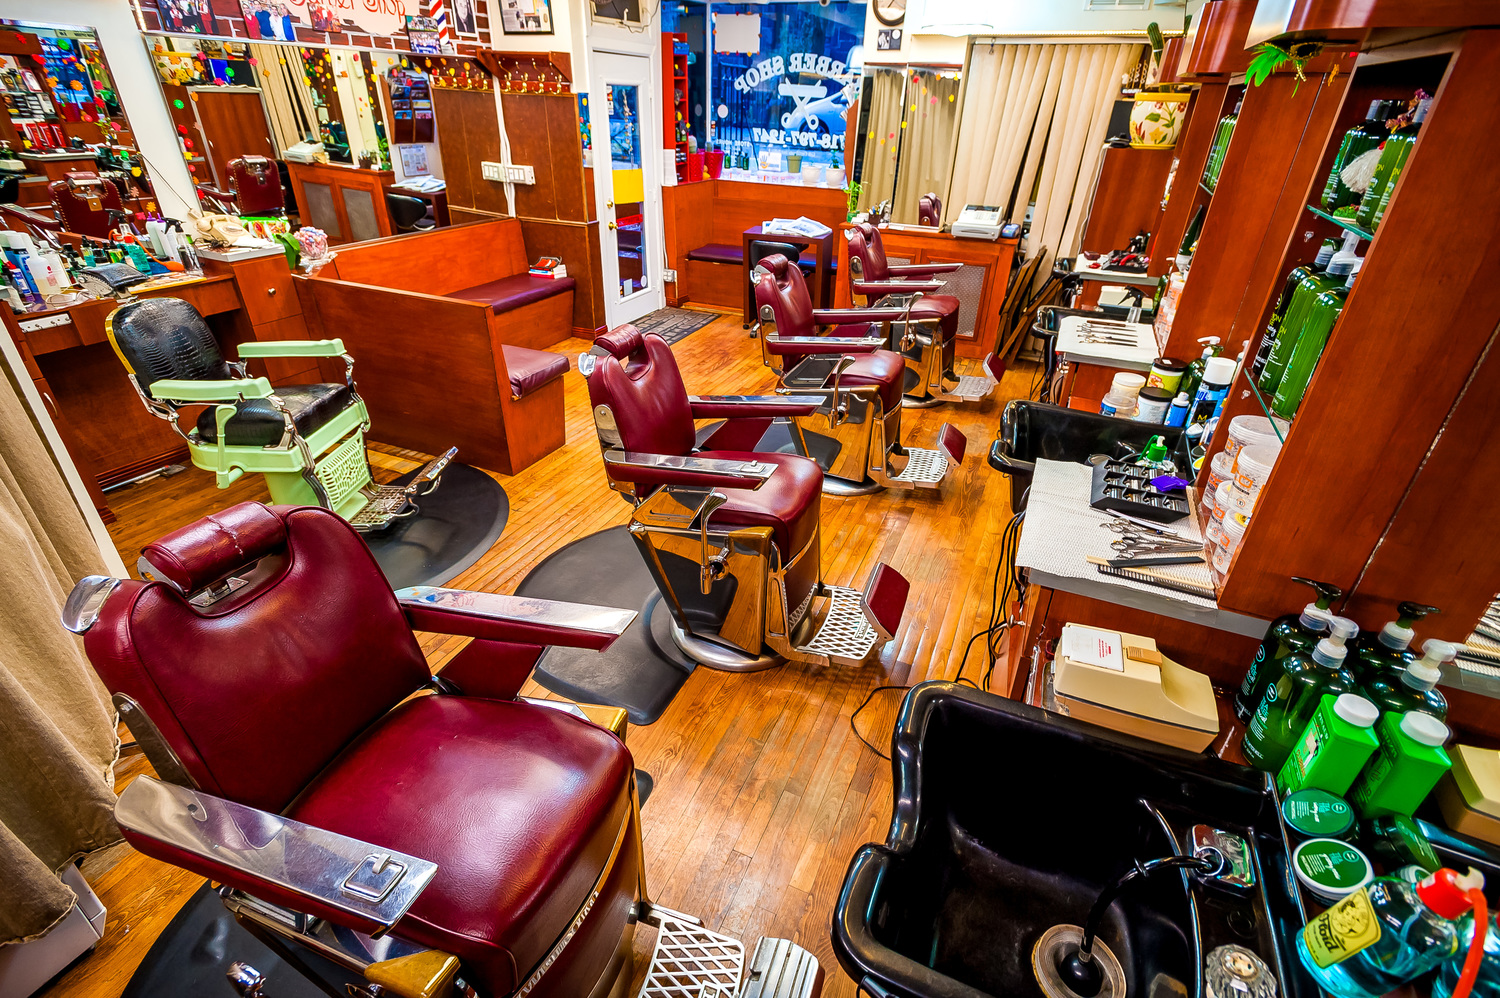 Clinton Street Barber Shop